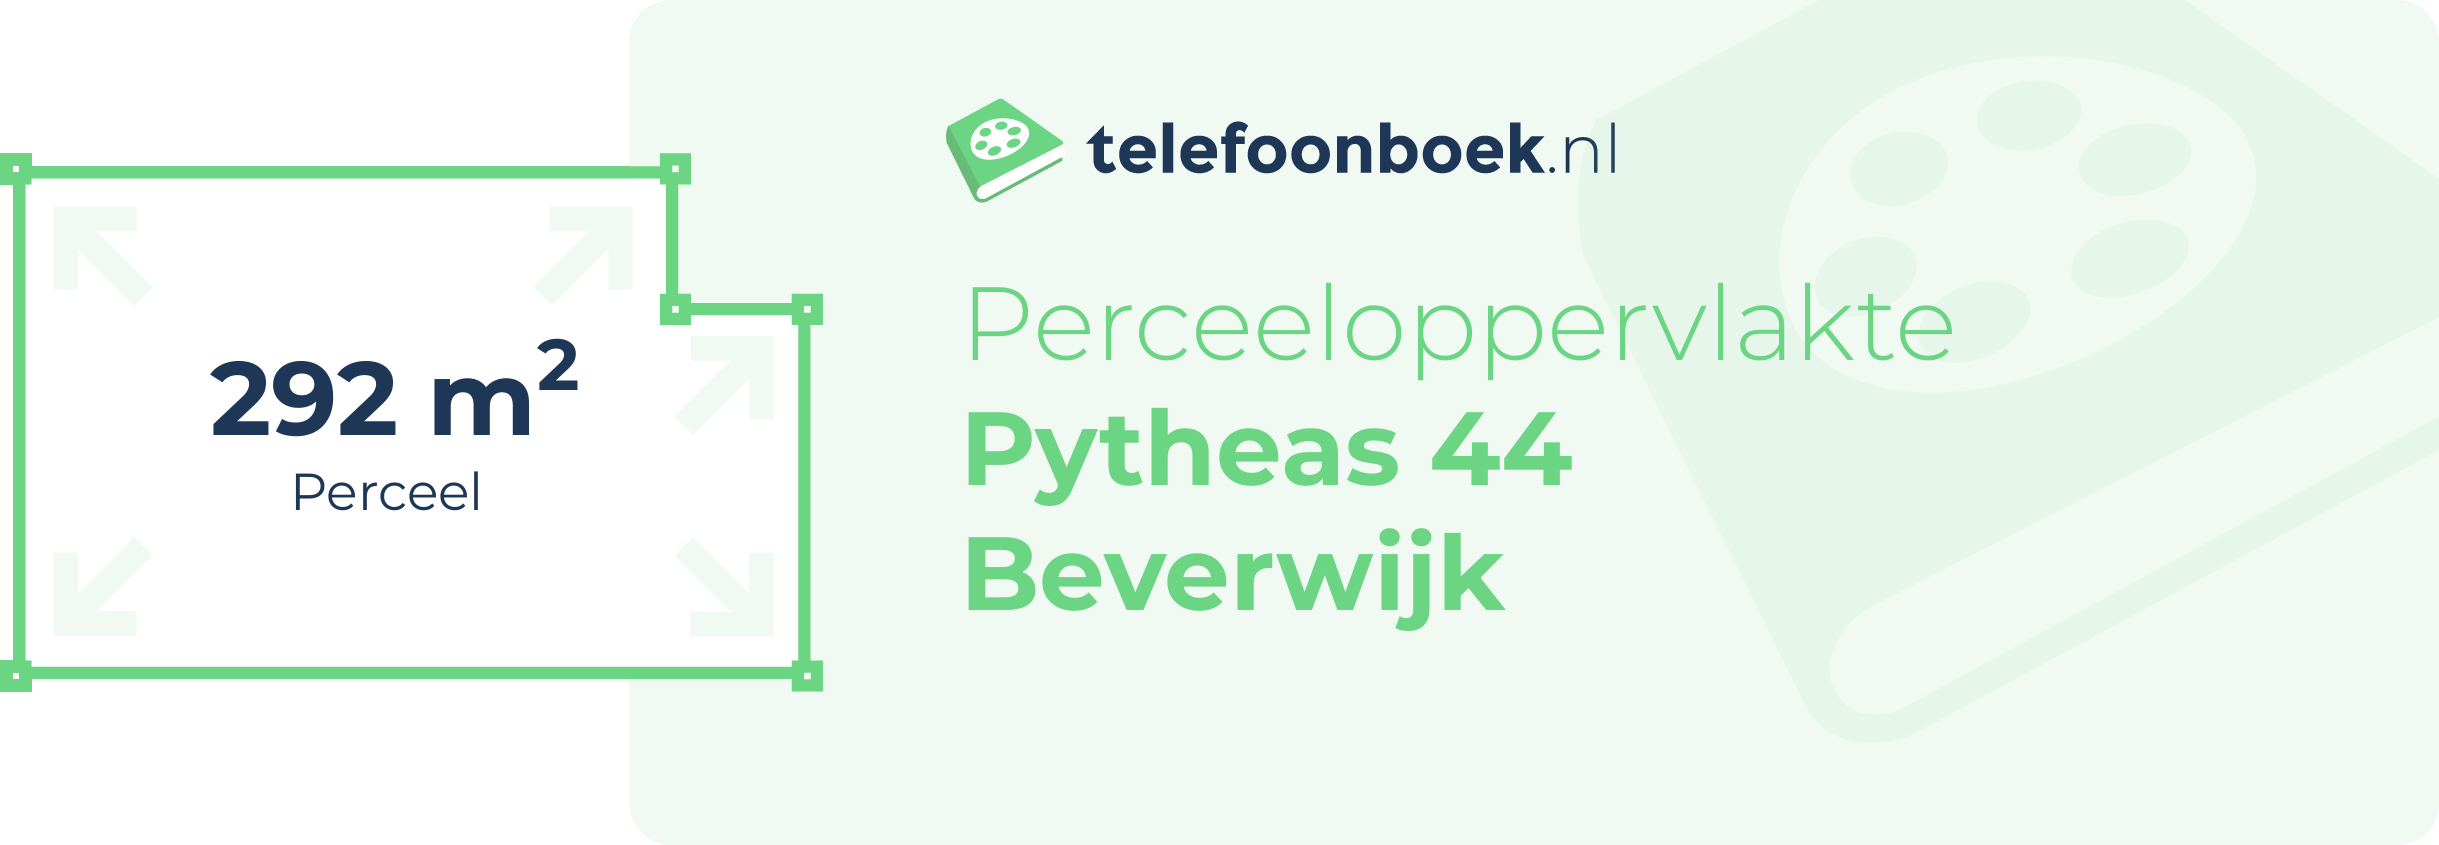 Perceeloppervlakte Pytheas 44 Beverwijk